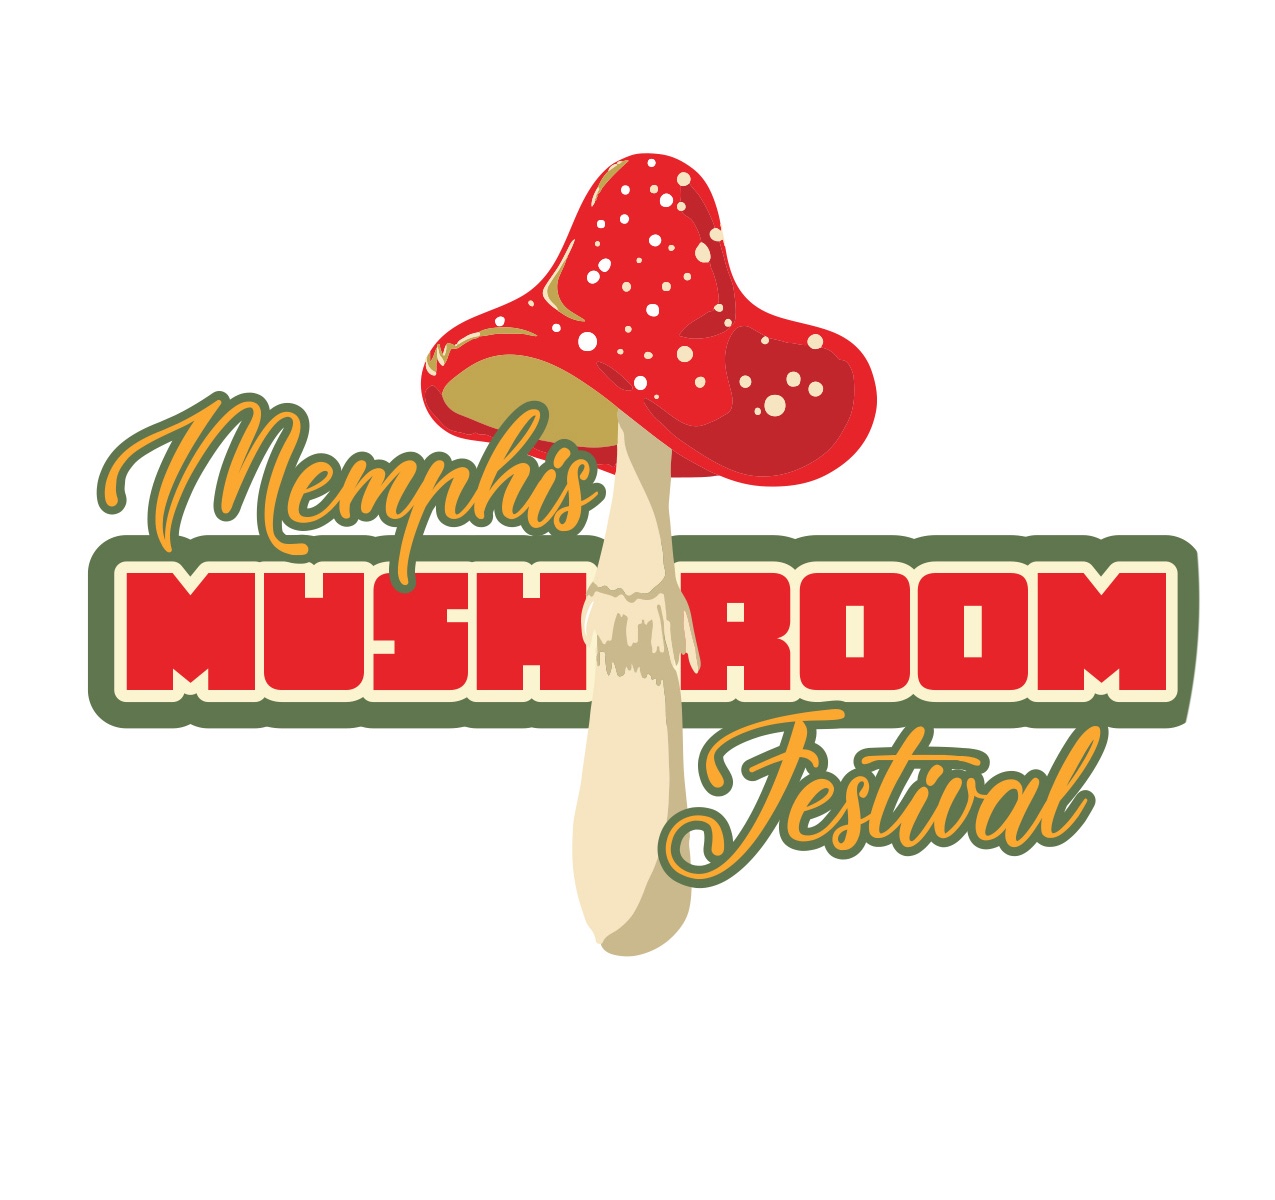 Memphis Mushroom Festival